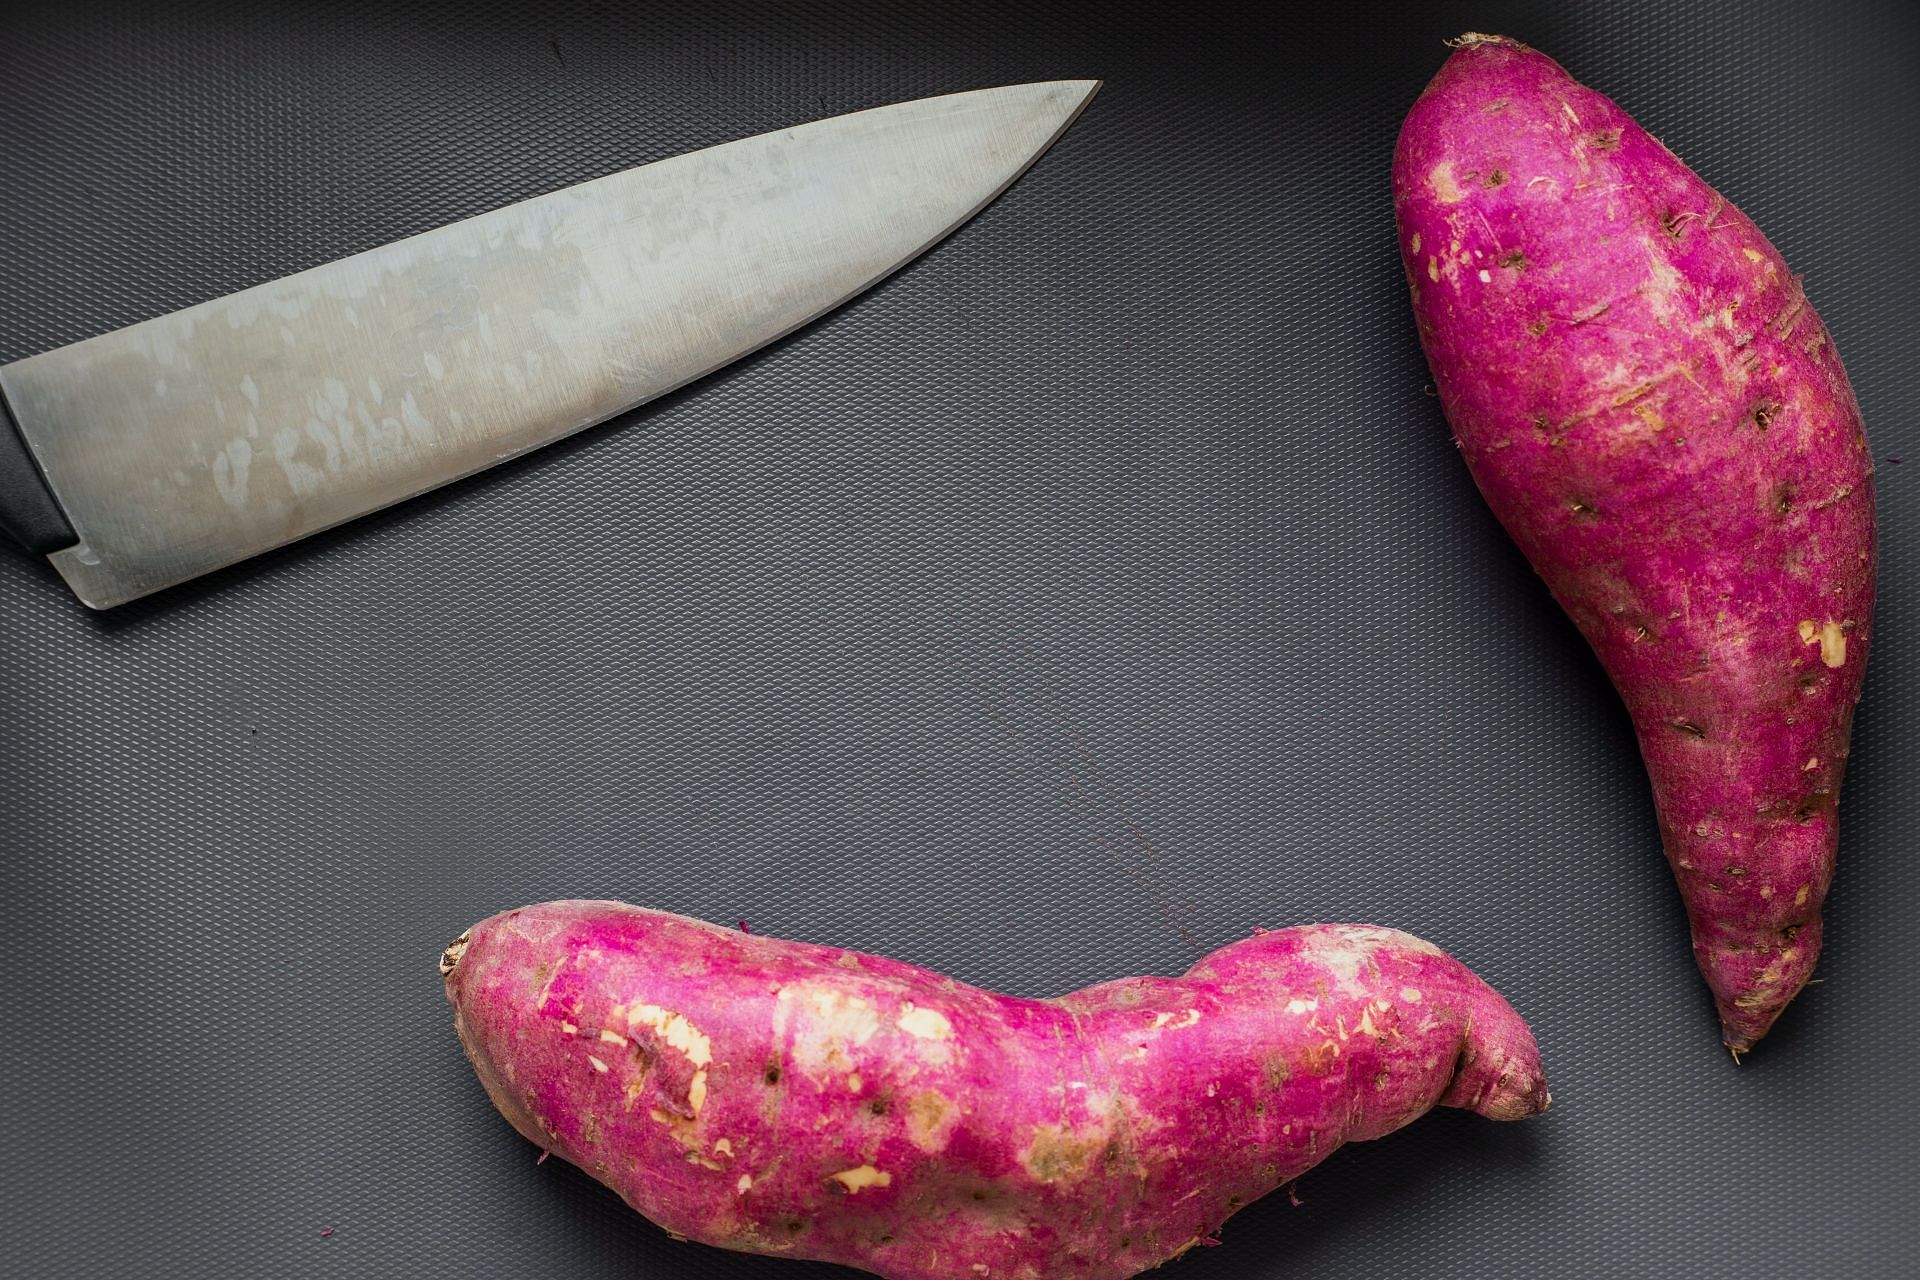 Sweet potatoes are good for eye health. (Image via Unsplash/Louis Hansel)